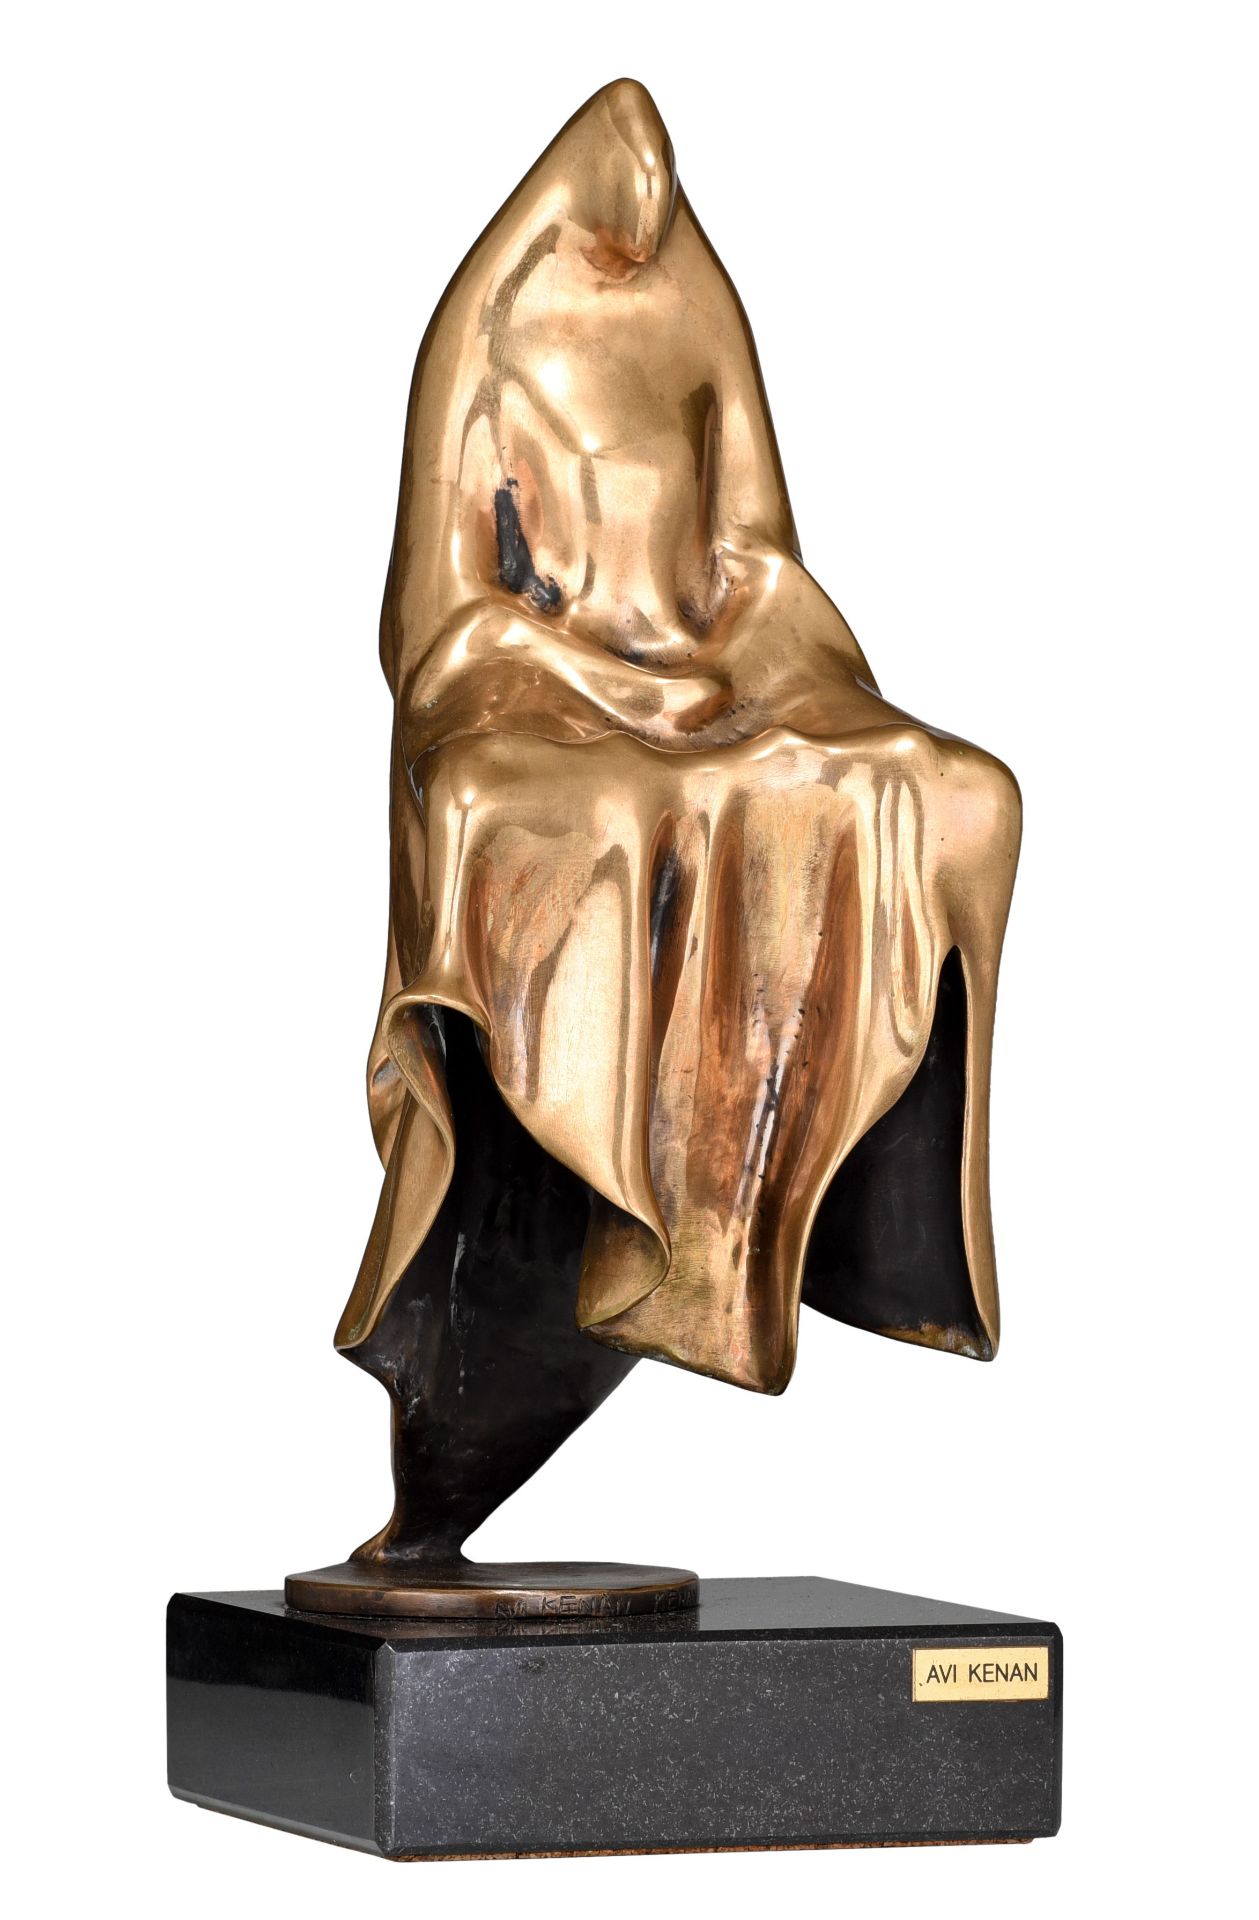 Avi Kenan (1951), untitled, 1985, N∞ 18/250, polished bronze on a granite base, H 42,5 - 49 cm (with